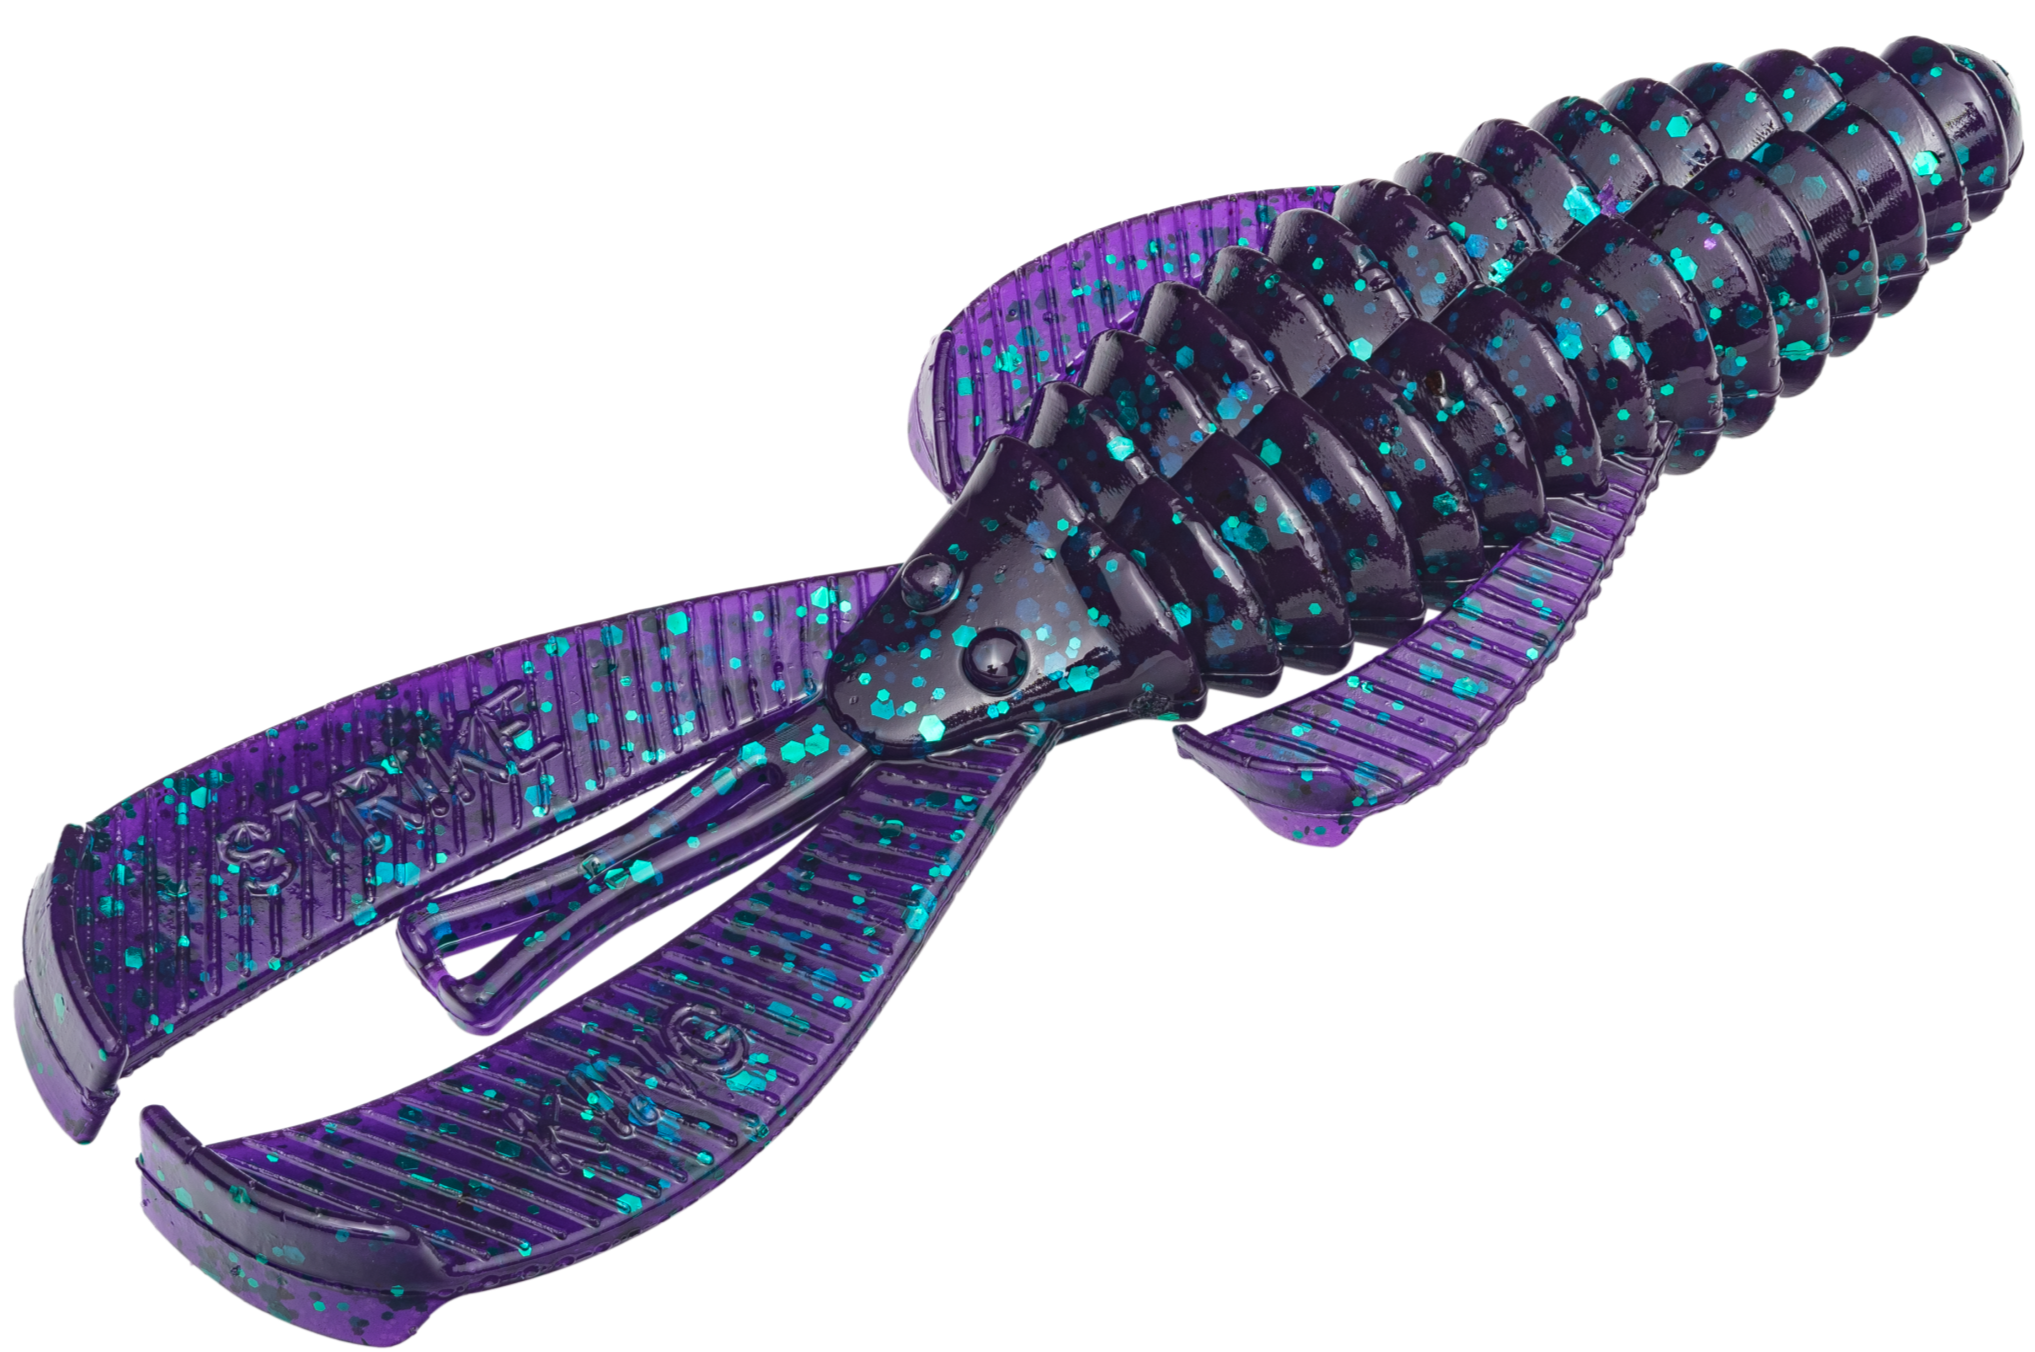 Bigfish Scales Purple - Bigfish Gear